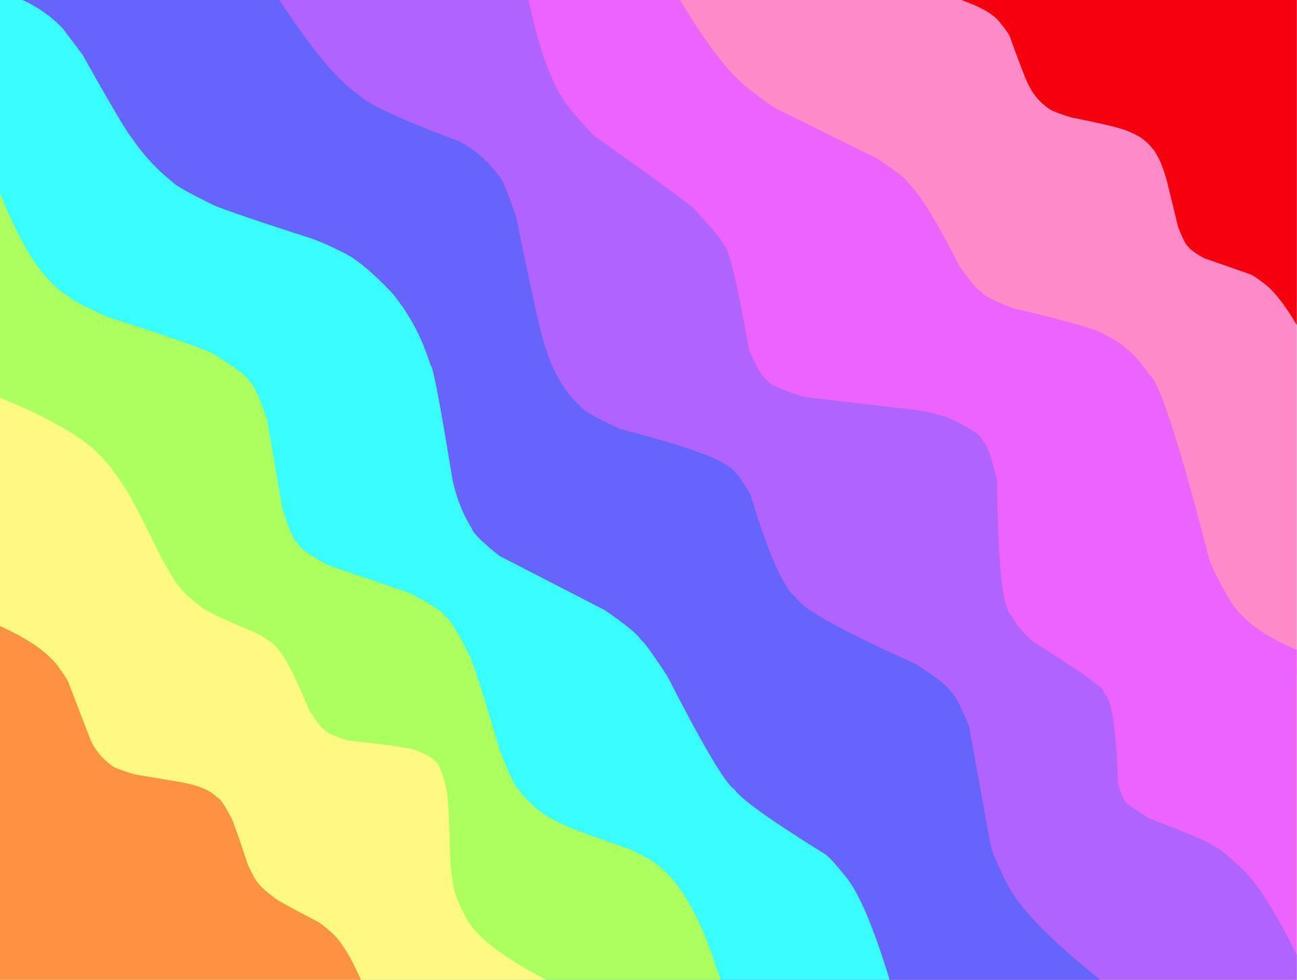 Pastel rainbow wave background wallpaper vector design